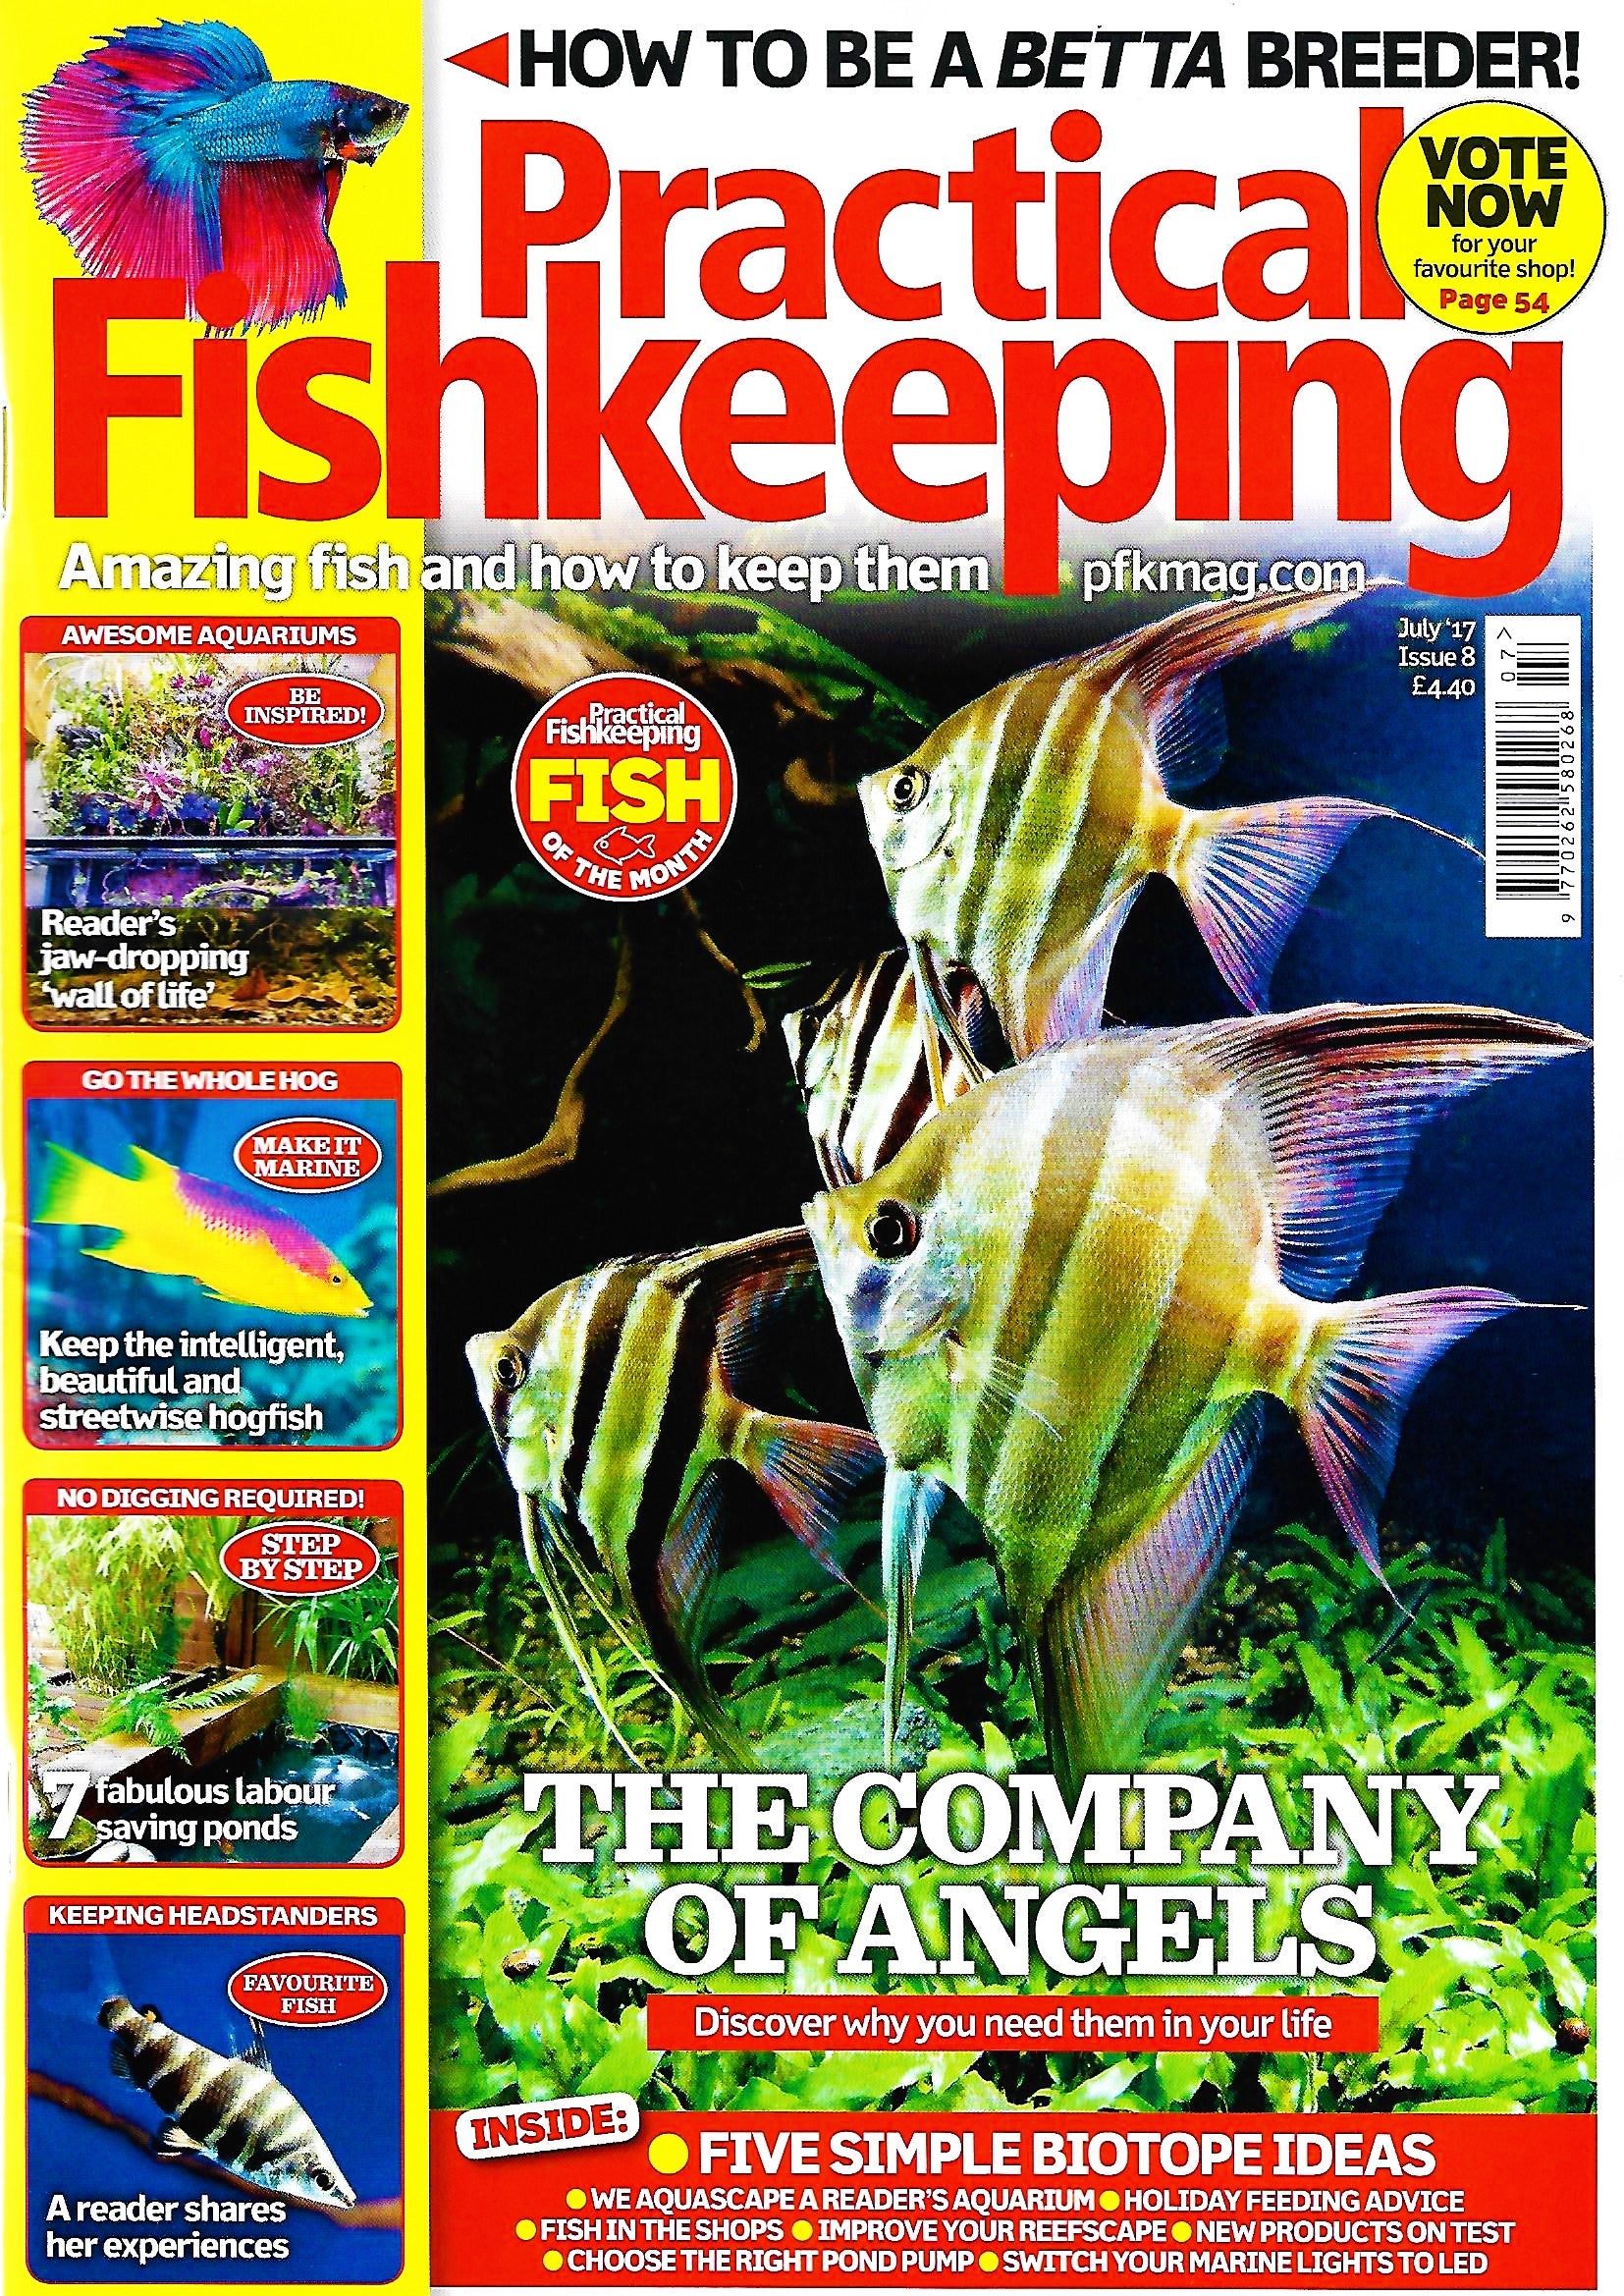 Practical Fishkeeping Magazine July 2017 Issue 8